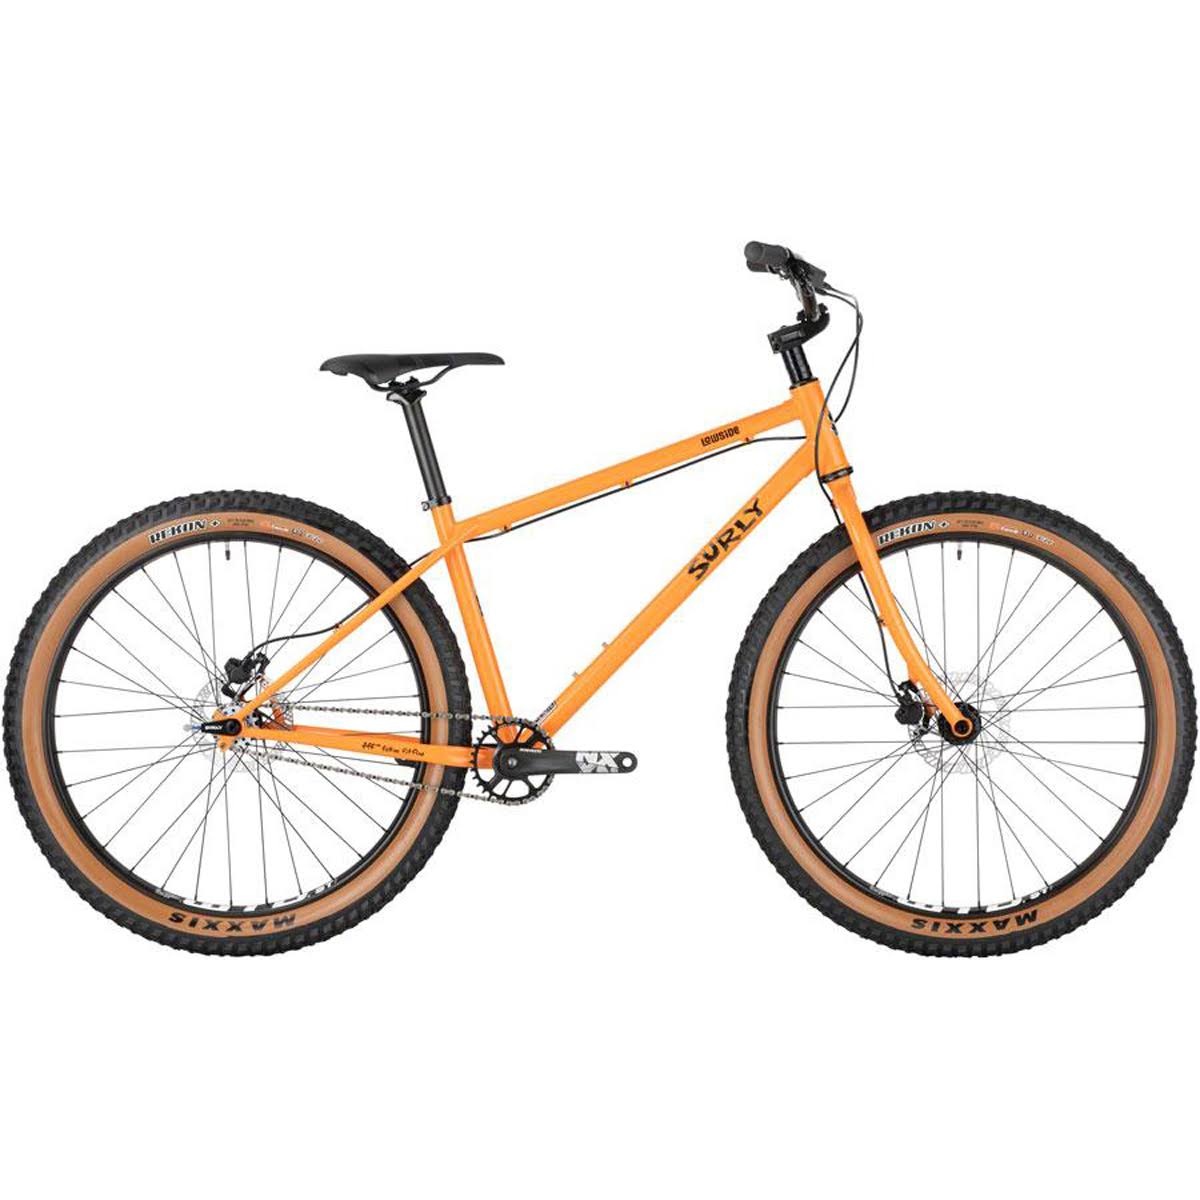 Surly Lowside Bike - Dream Tangerine Medium